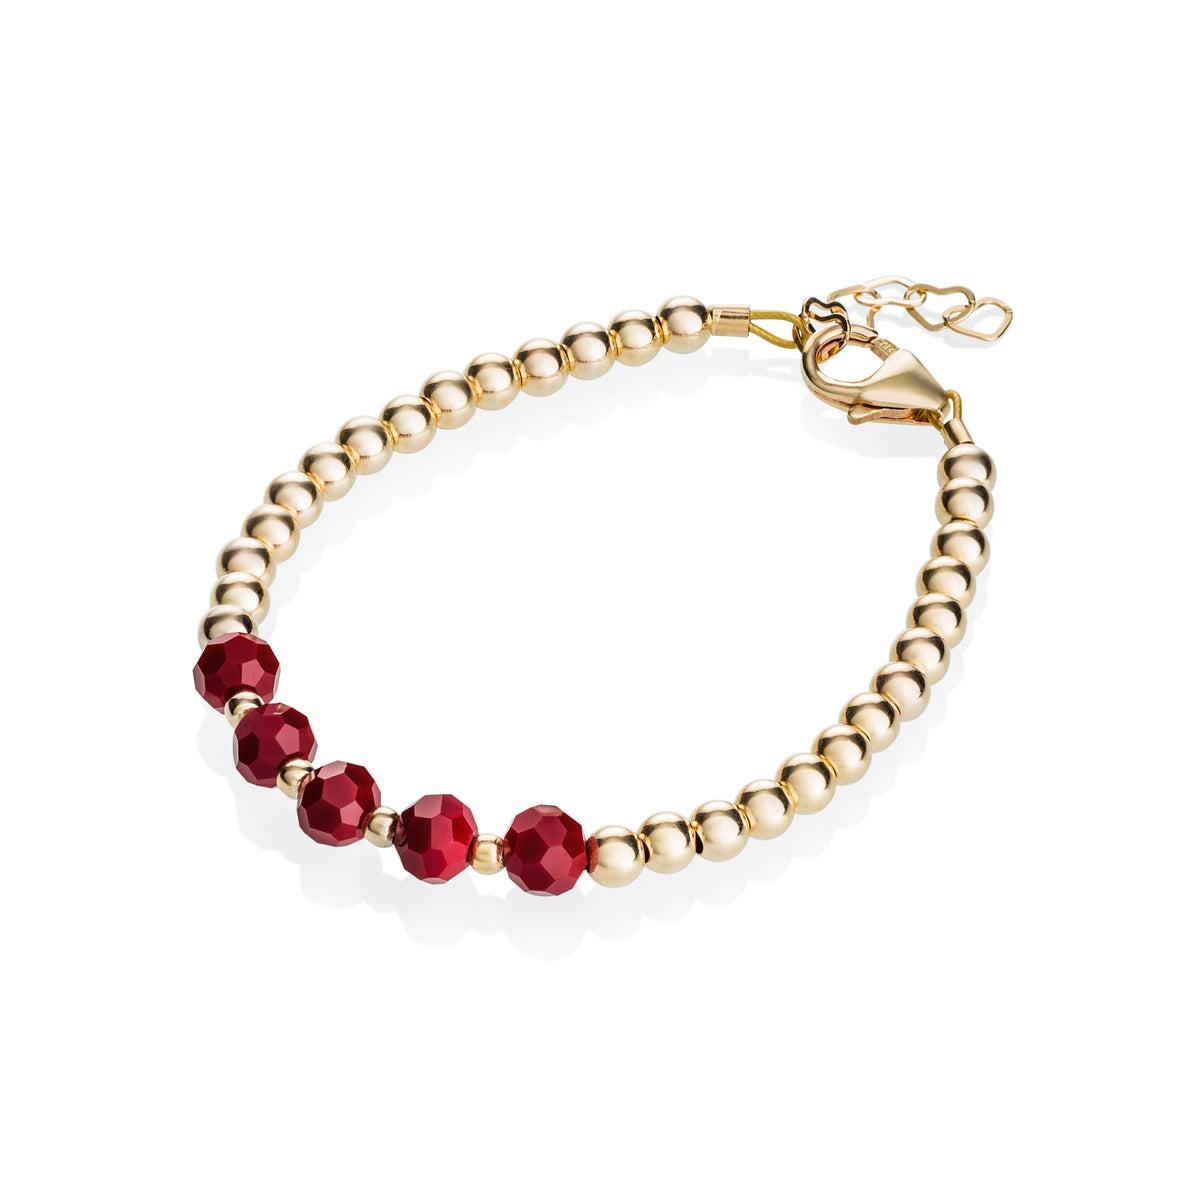 Gold filled maroon crystal and gold beaded adjustable bracelet